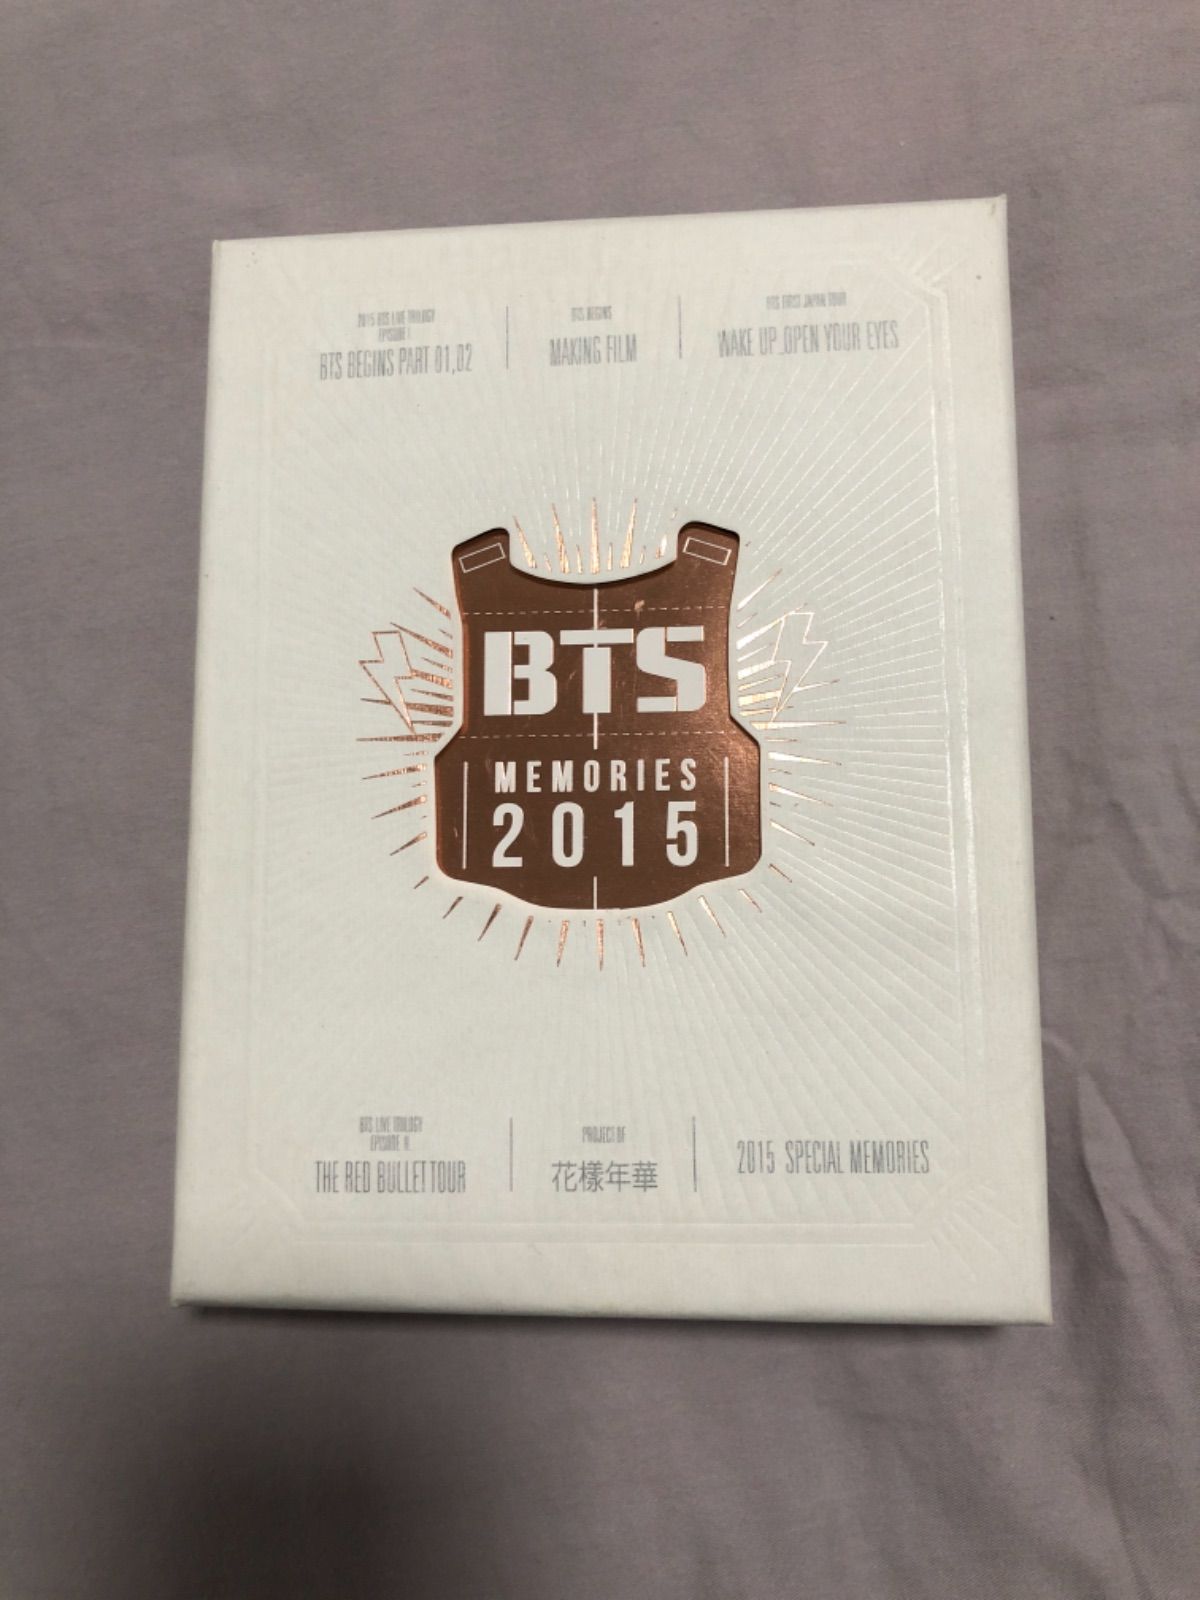 BTS MEMORIES OF 2015 DVD 日本語字幕付き - メルカリ